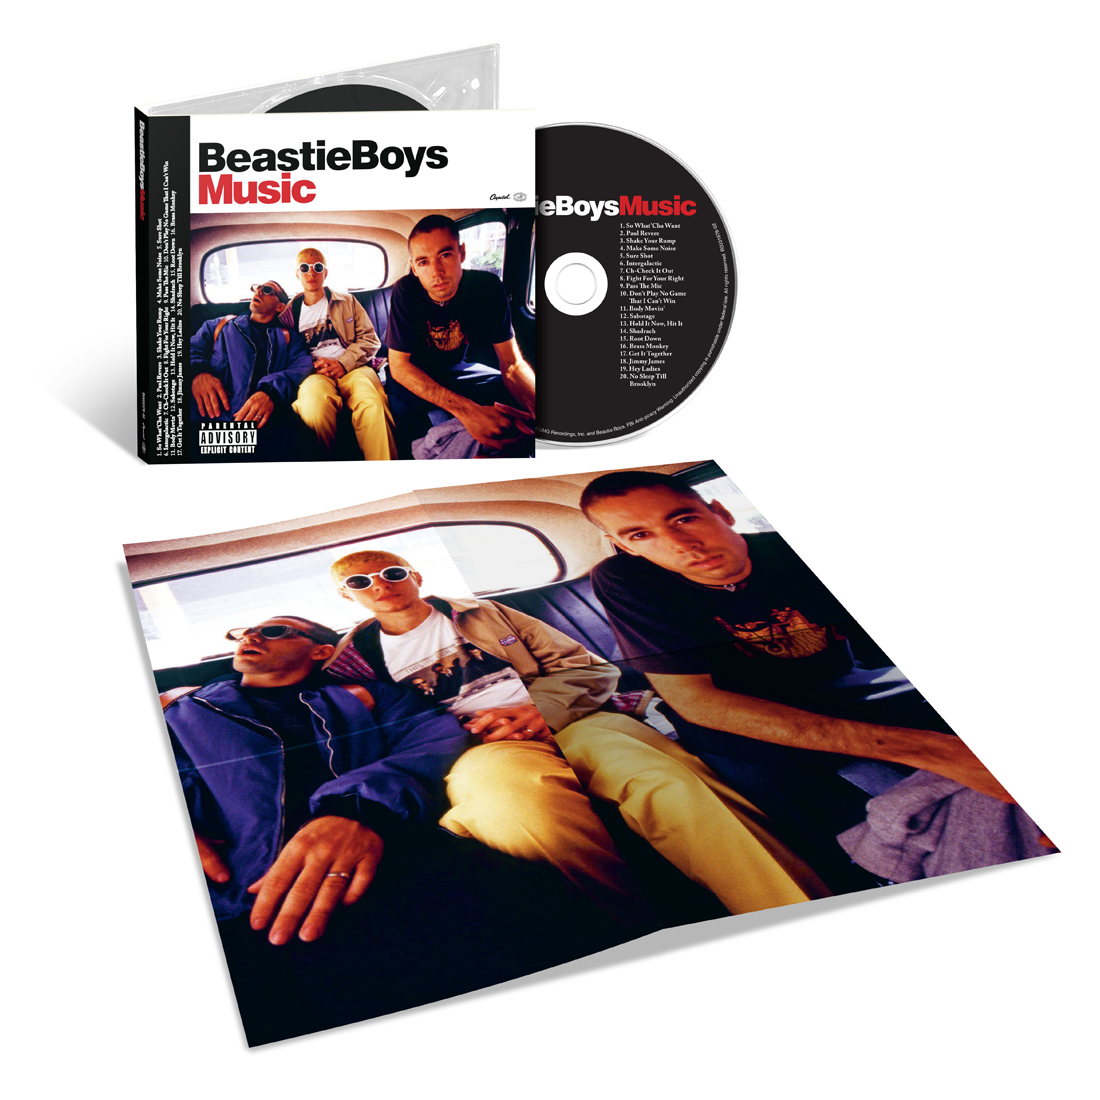 Beastie Boys - Beastie Boys Music CD